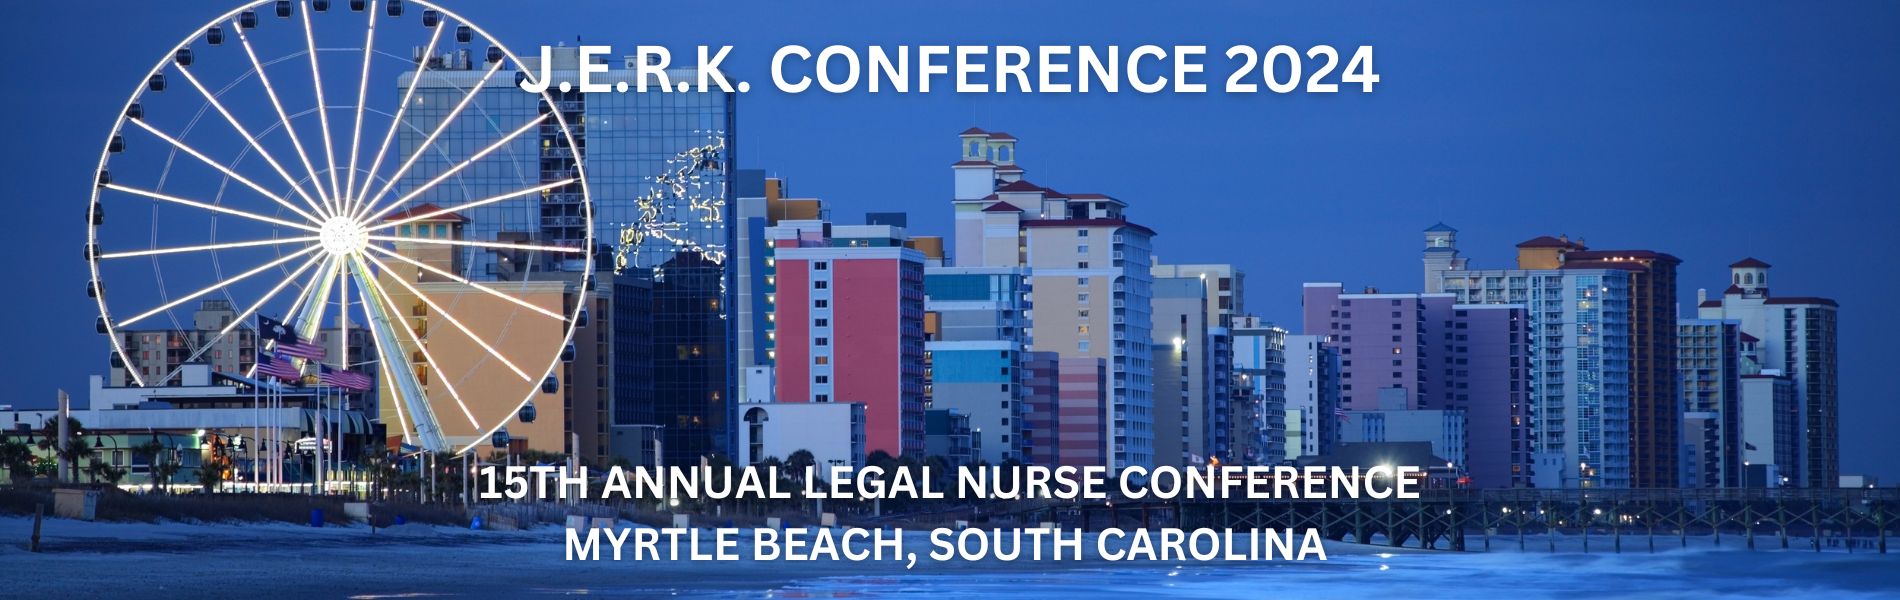 Legal Nurse Conference